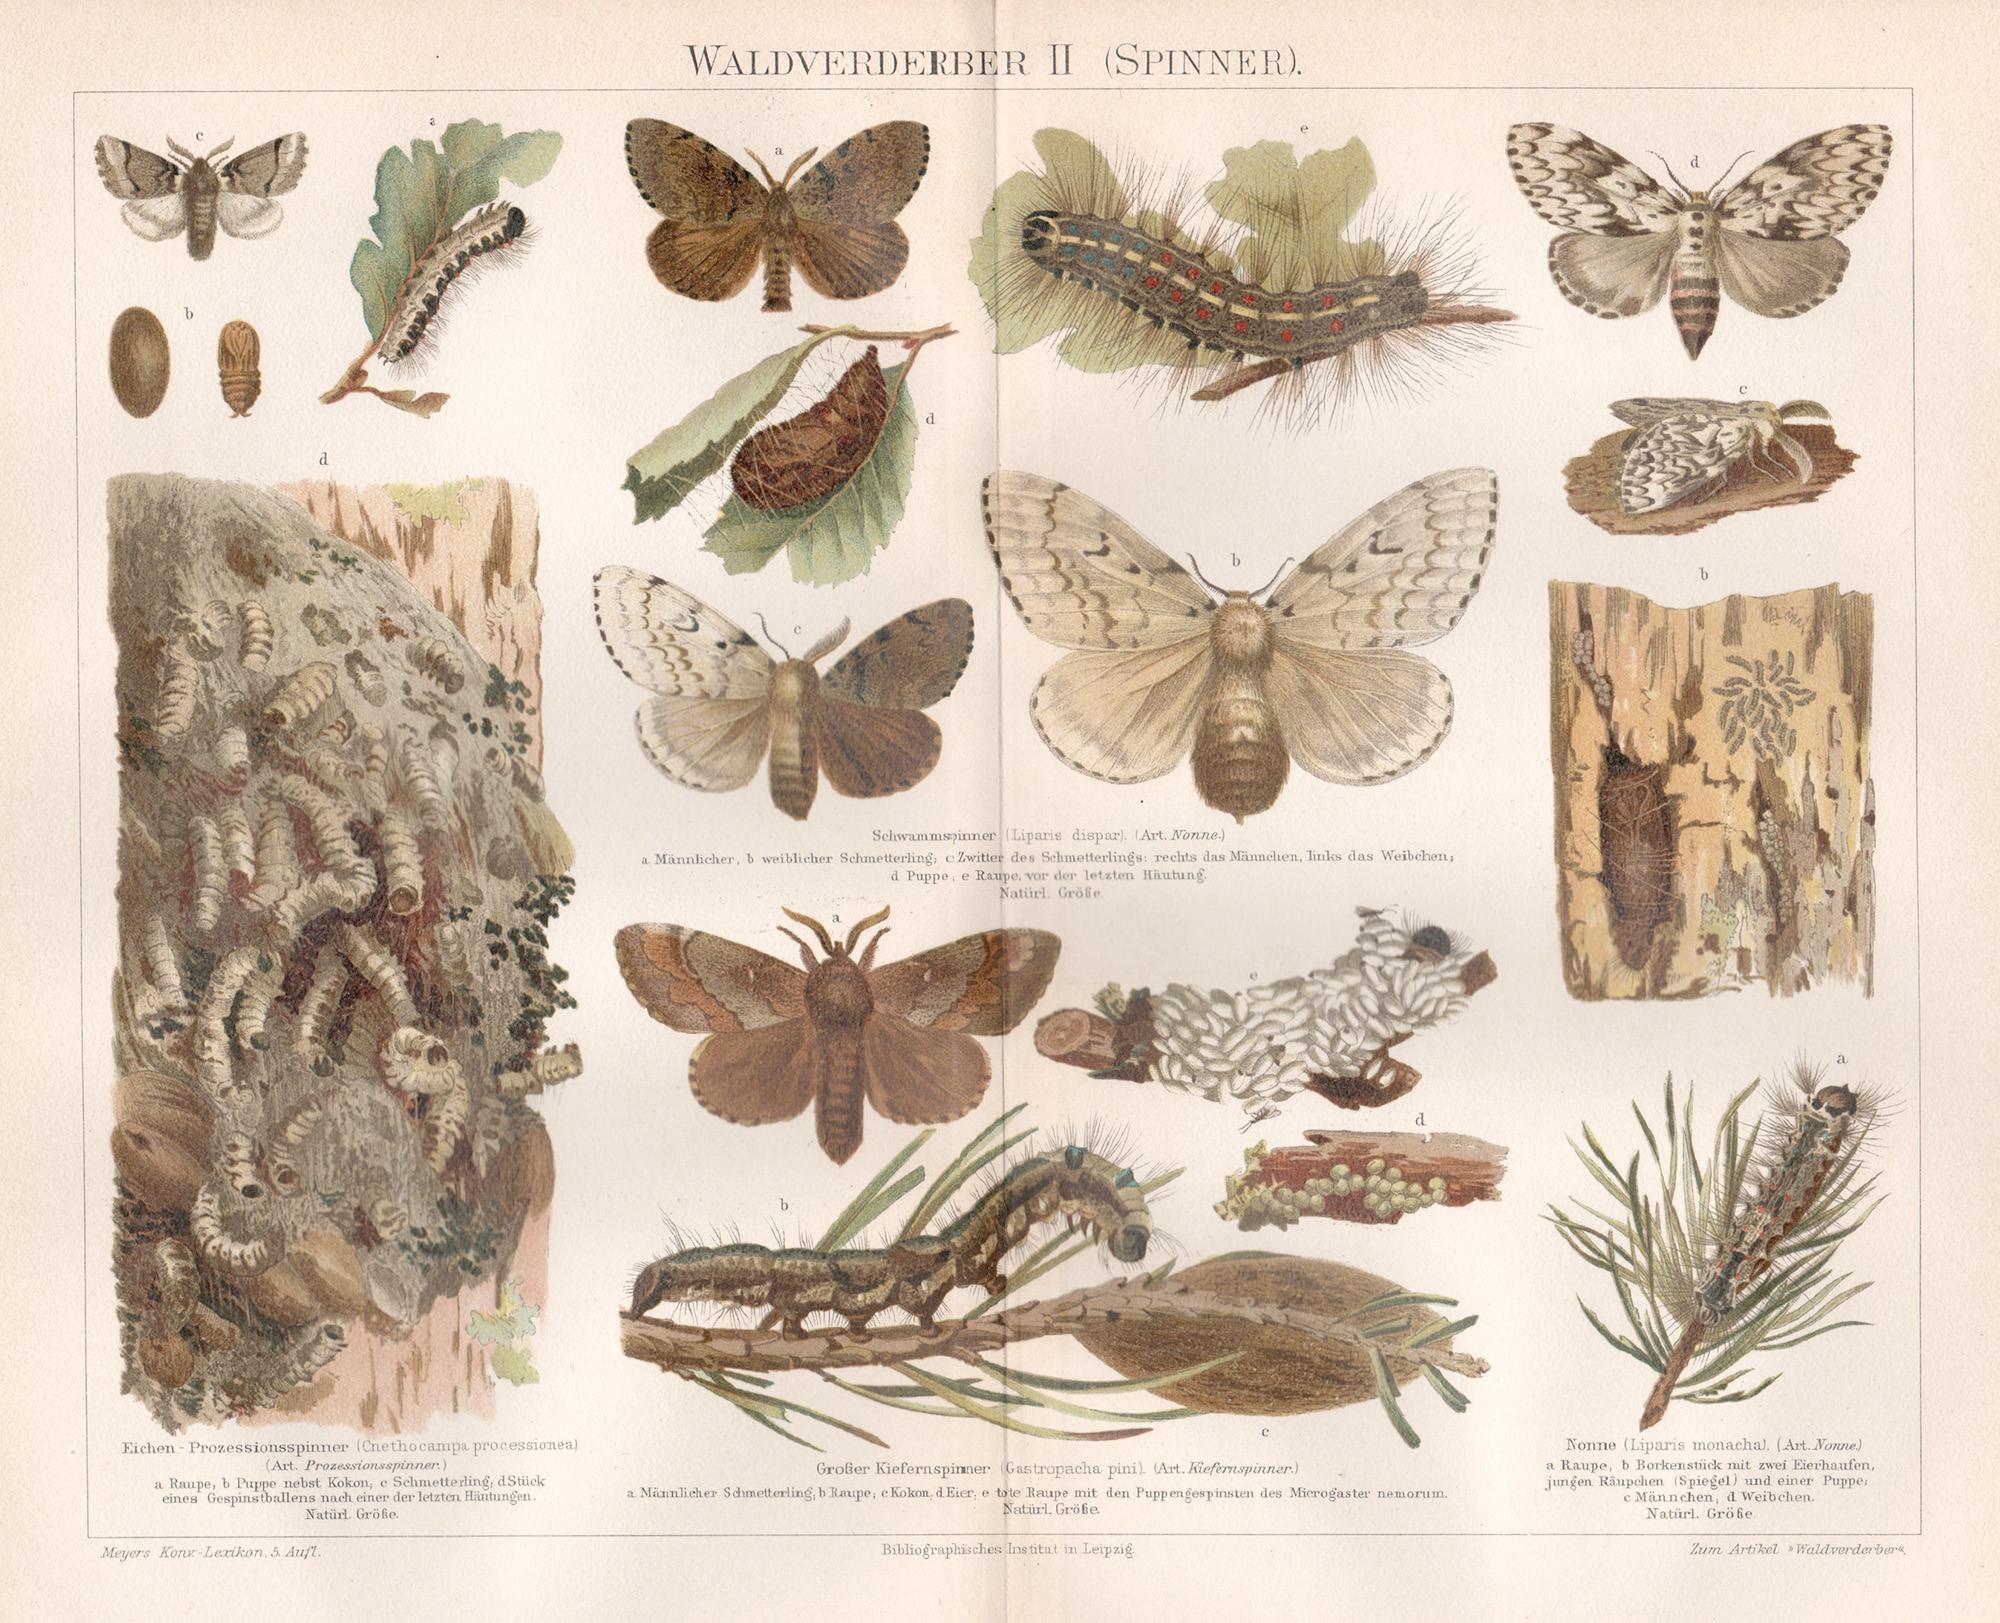 Animal Print Unknown - Waldverderber II (Spinner) I (Moths), gravure d'histoire naturelle ancienne allemande